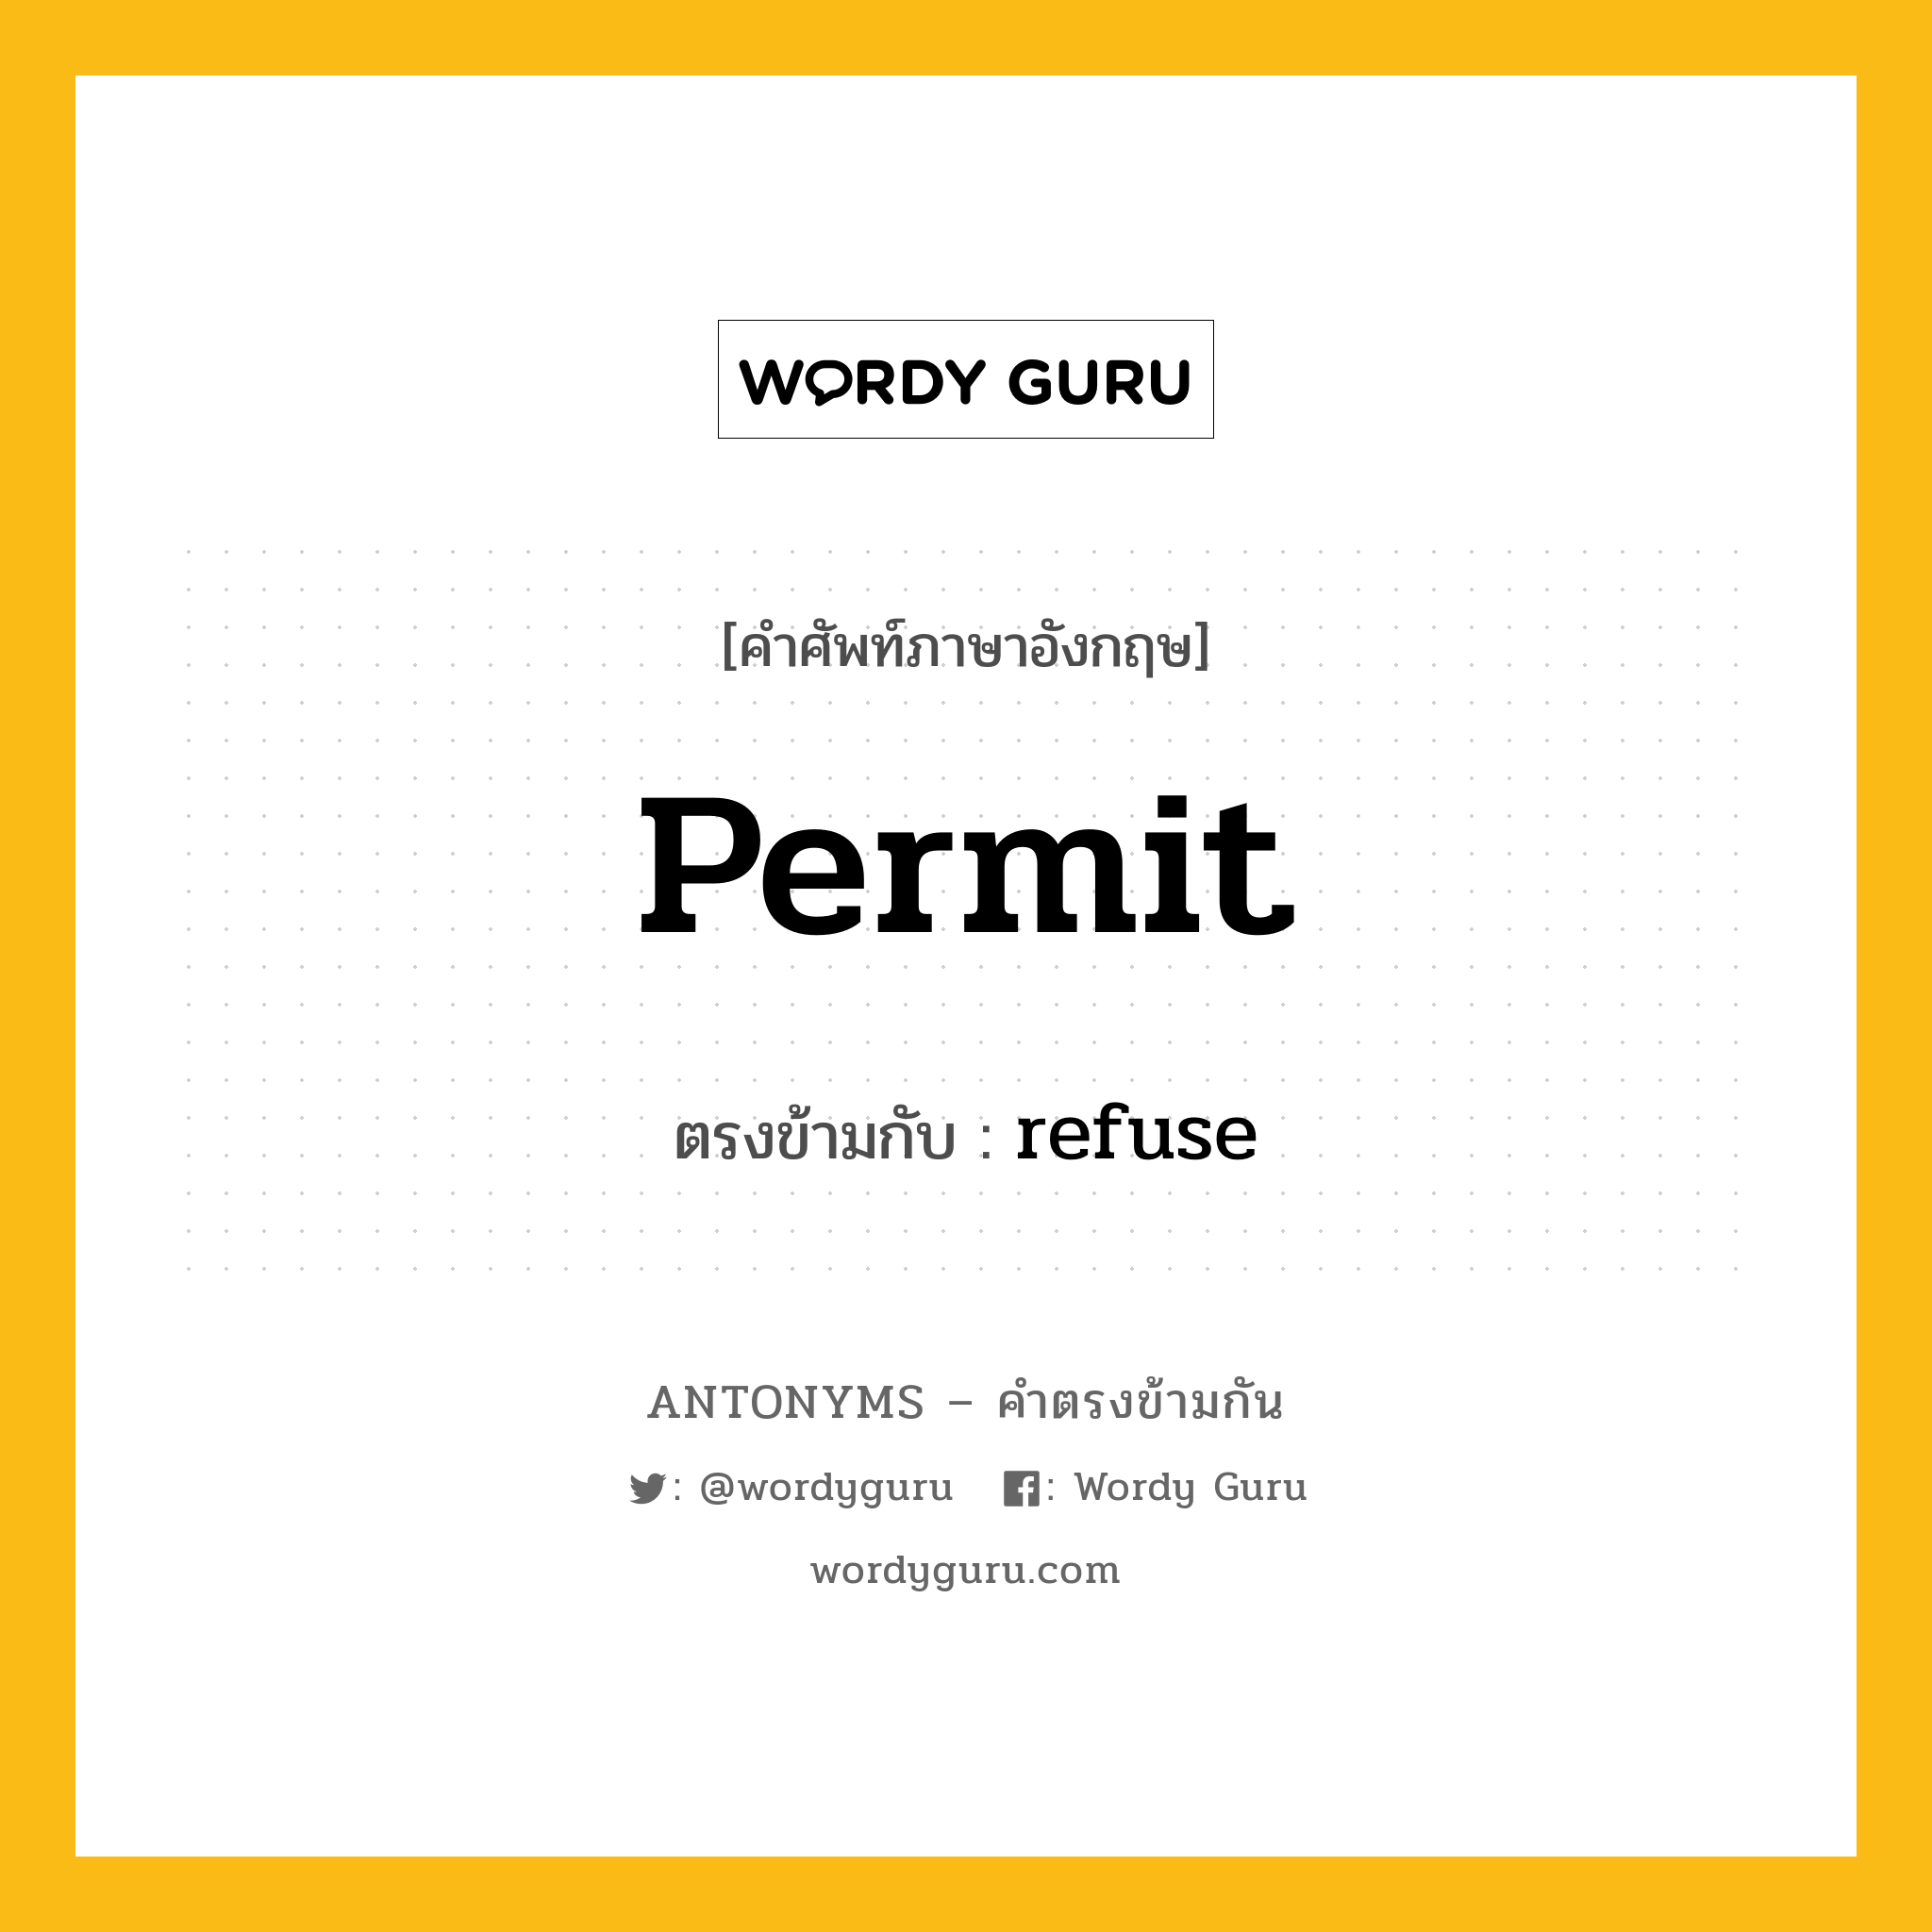 permit เป็นคำตรงข้ามกับคำไหนบ้าง?, คำศัพท์ภาษาอังกฤษ permit ตรงข้ามกับ refuse หมวด refuse